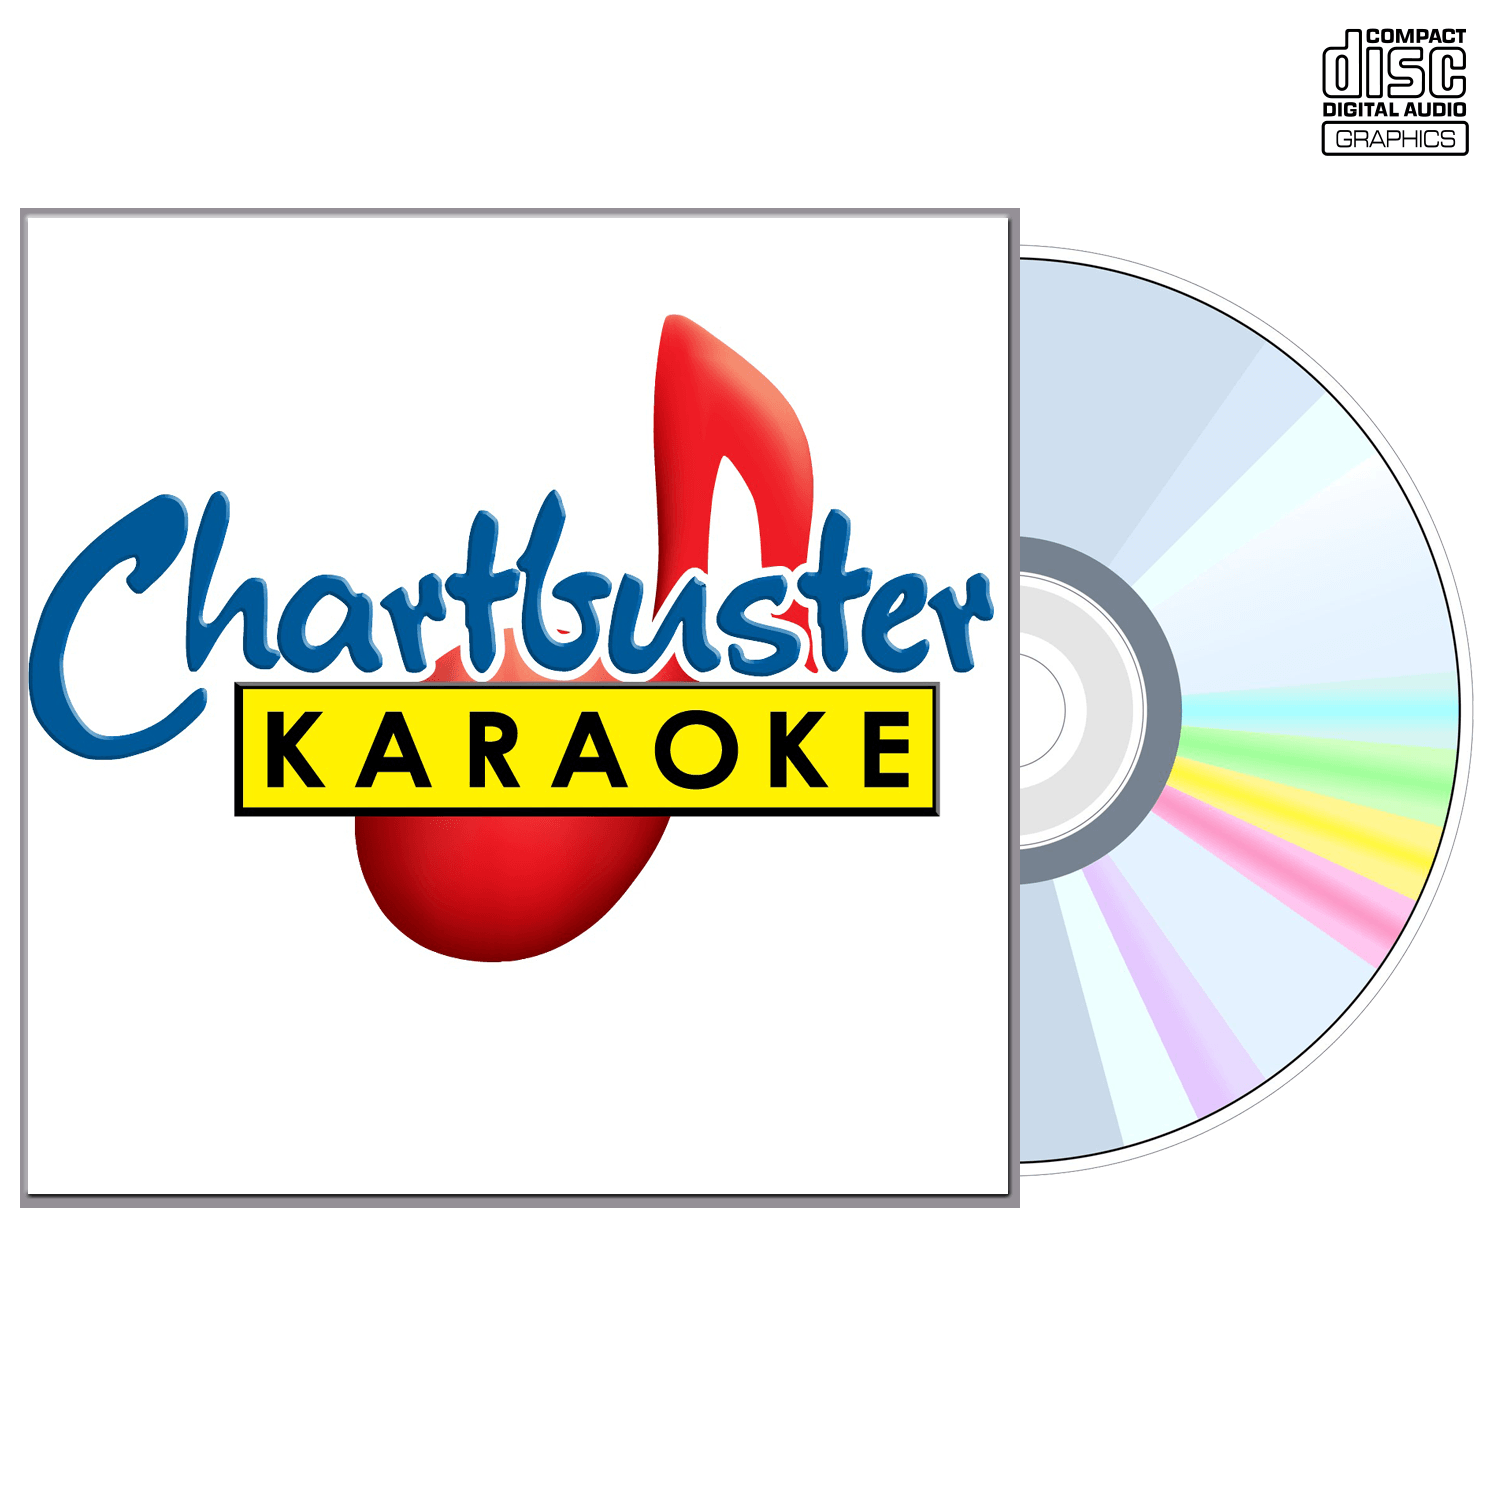 Ultimate 90's Collection Vol 14 - CD+G - Chartbuster Karaoke - Karaoke Home Entertainment